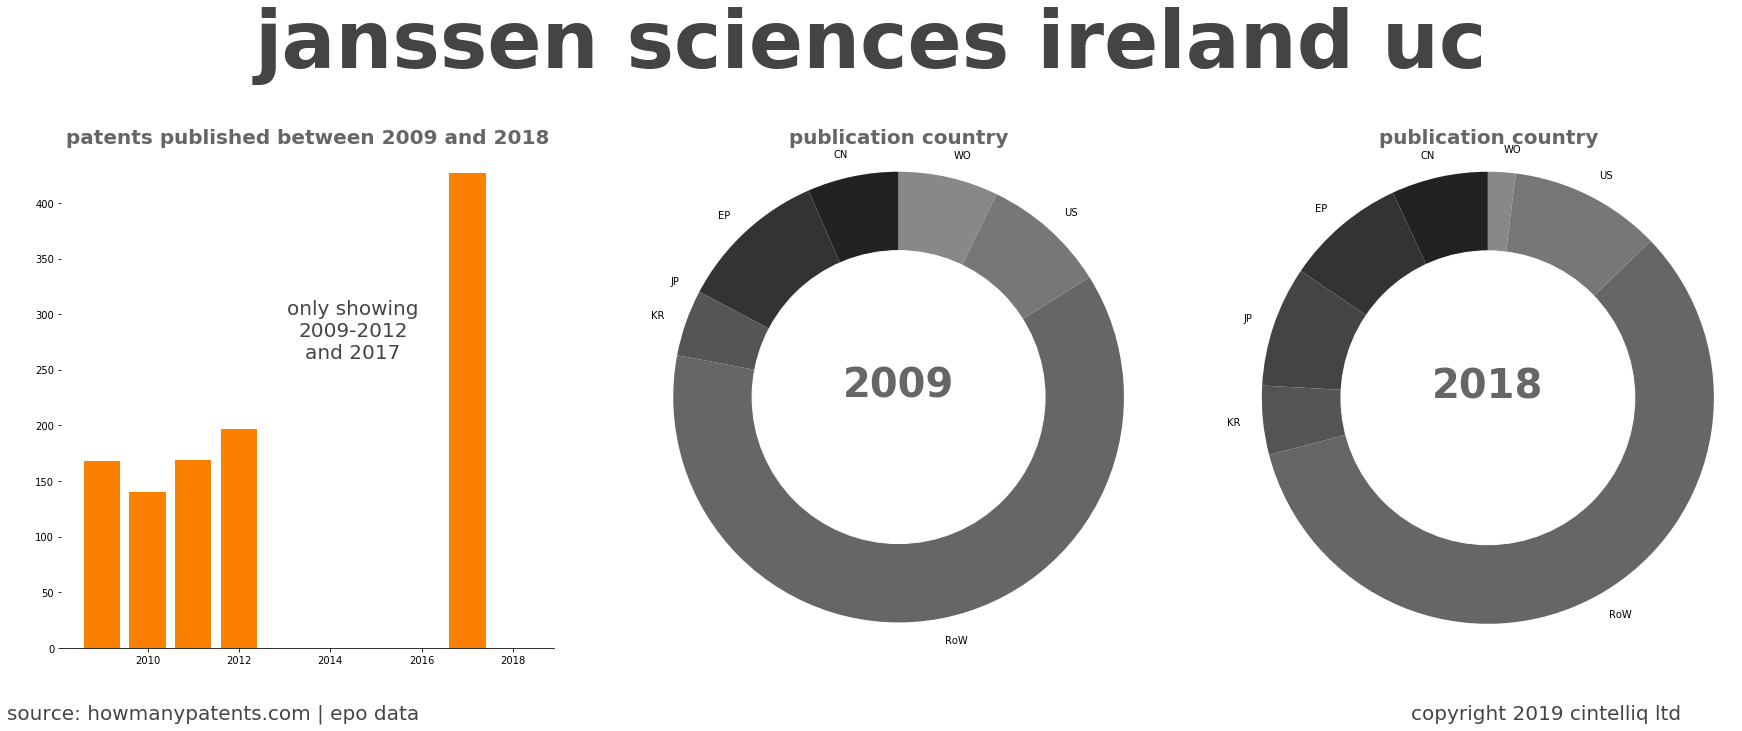 summary of patents for Janssen Sciences Ireland Uc